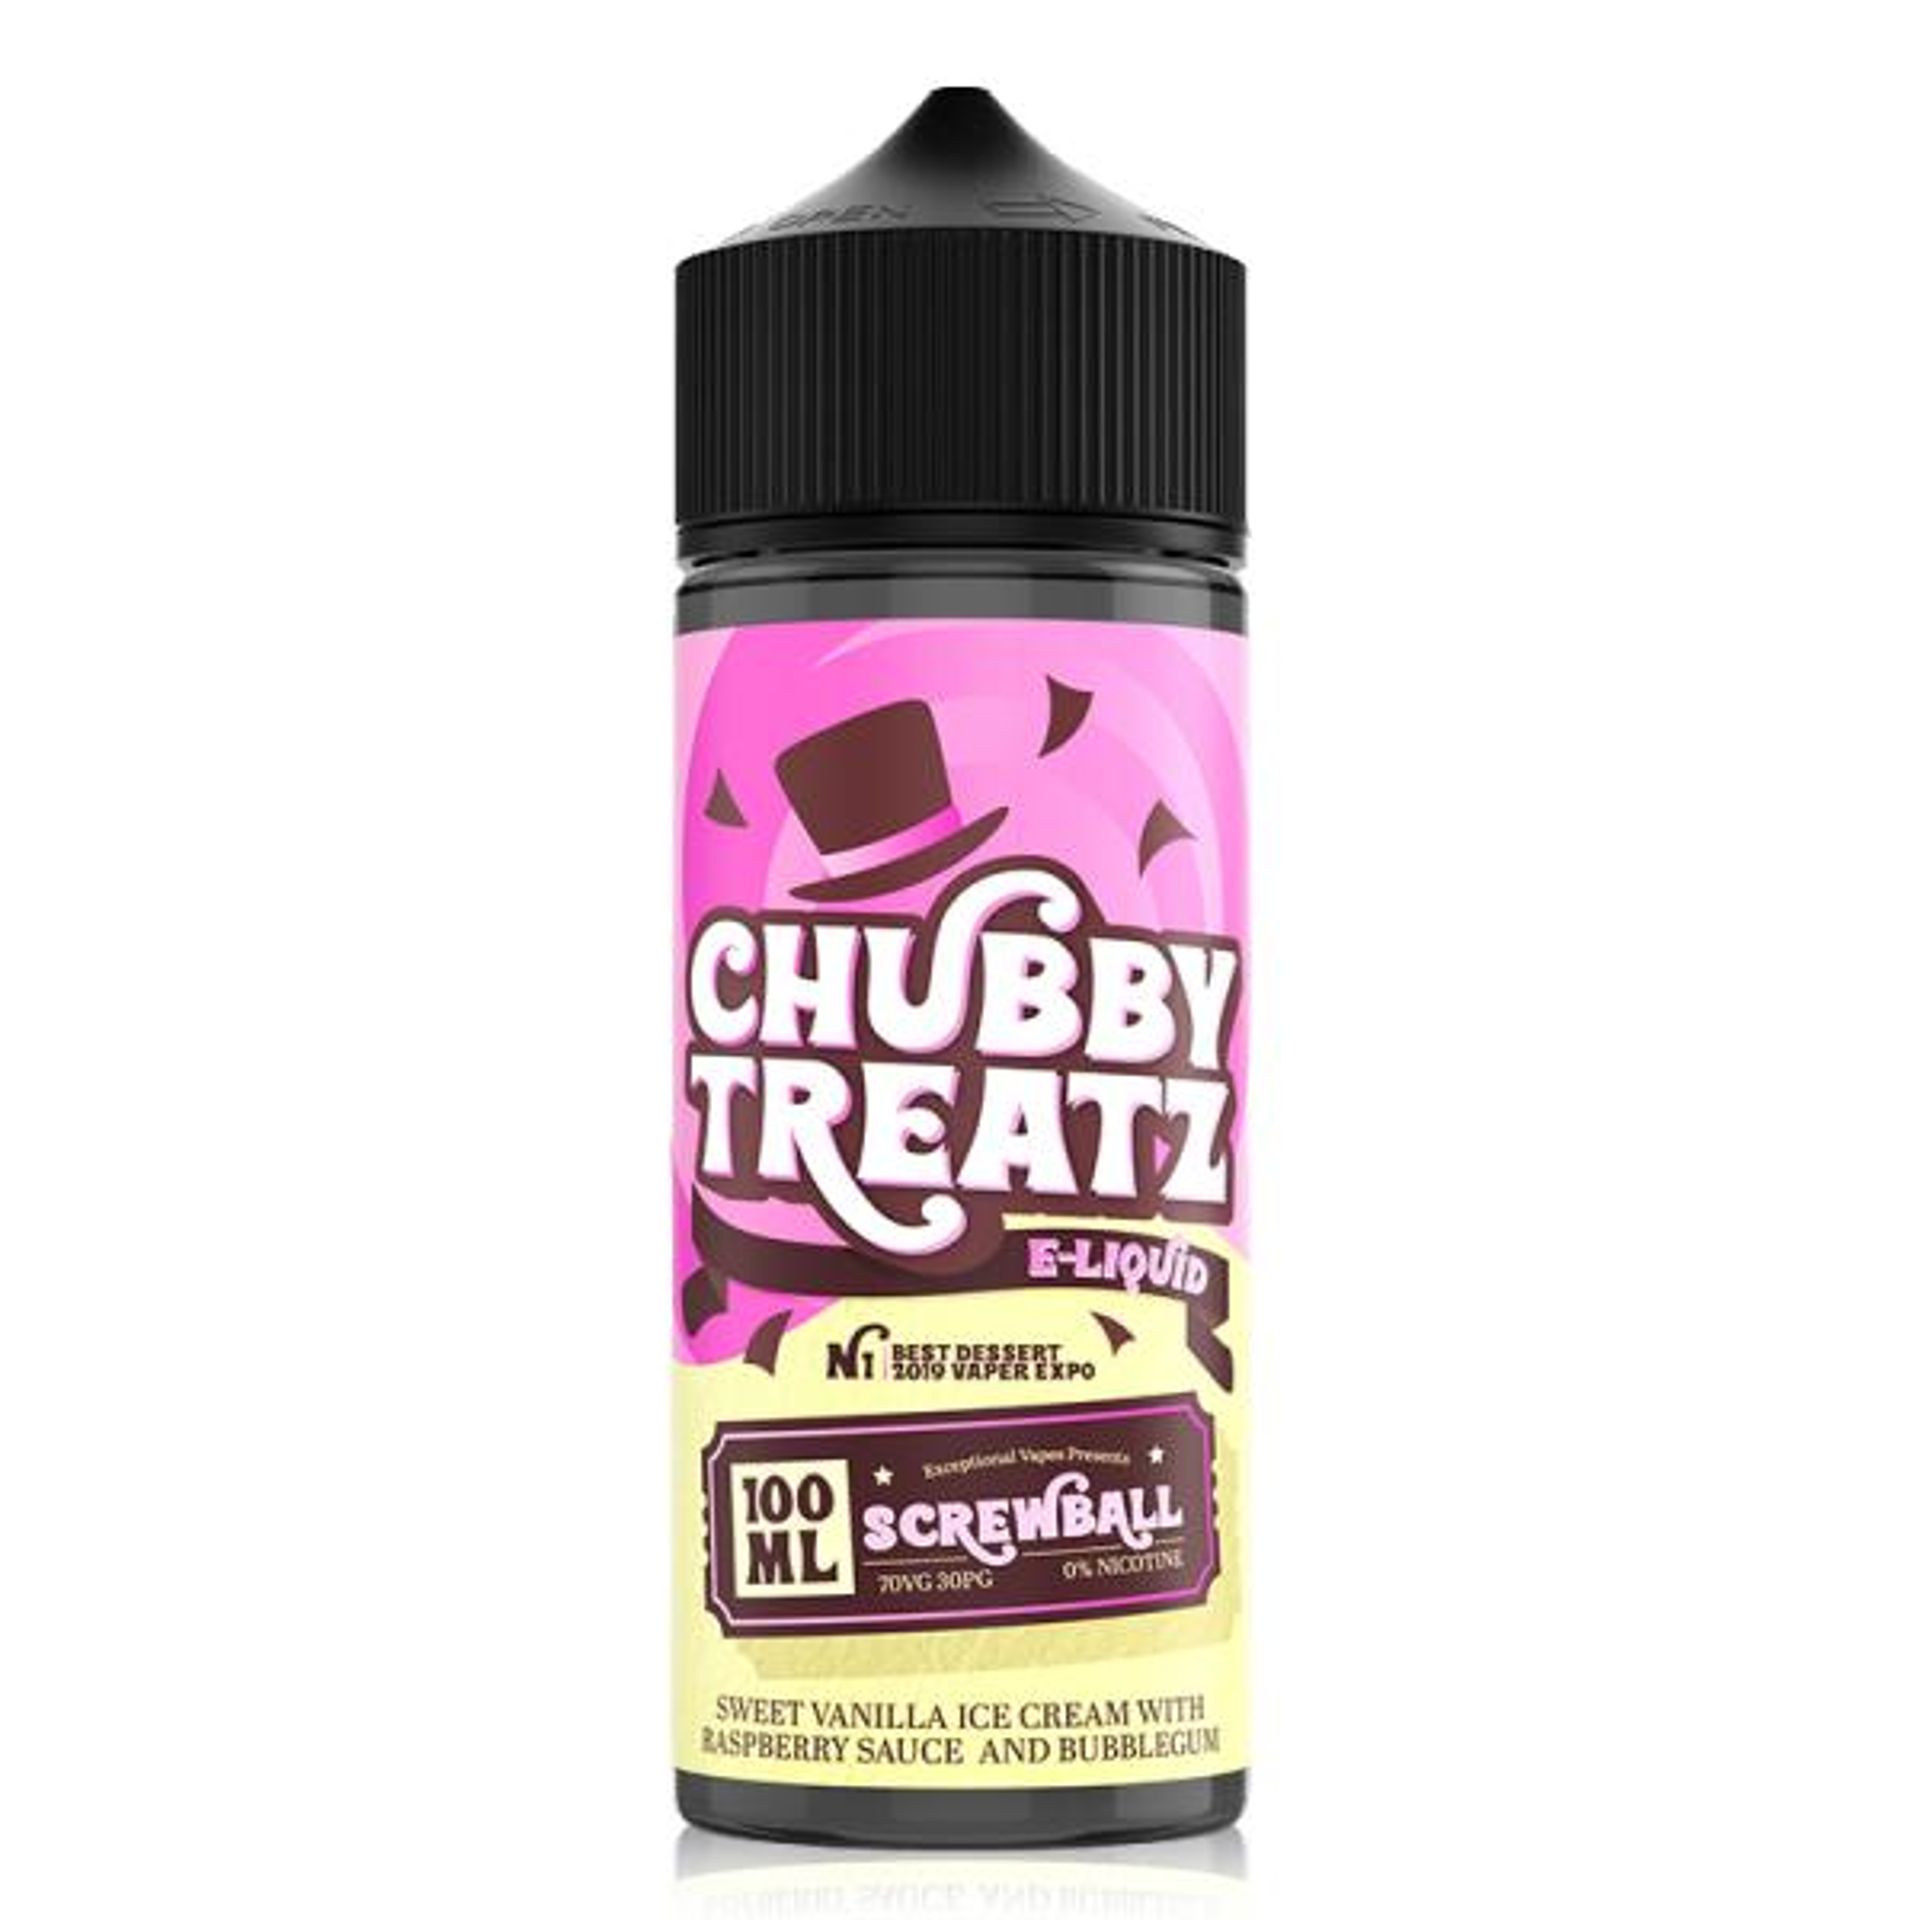 Image of Screwball Ice Cream by Chubby Treatz